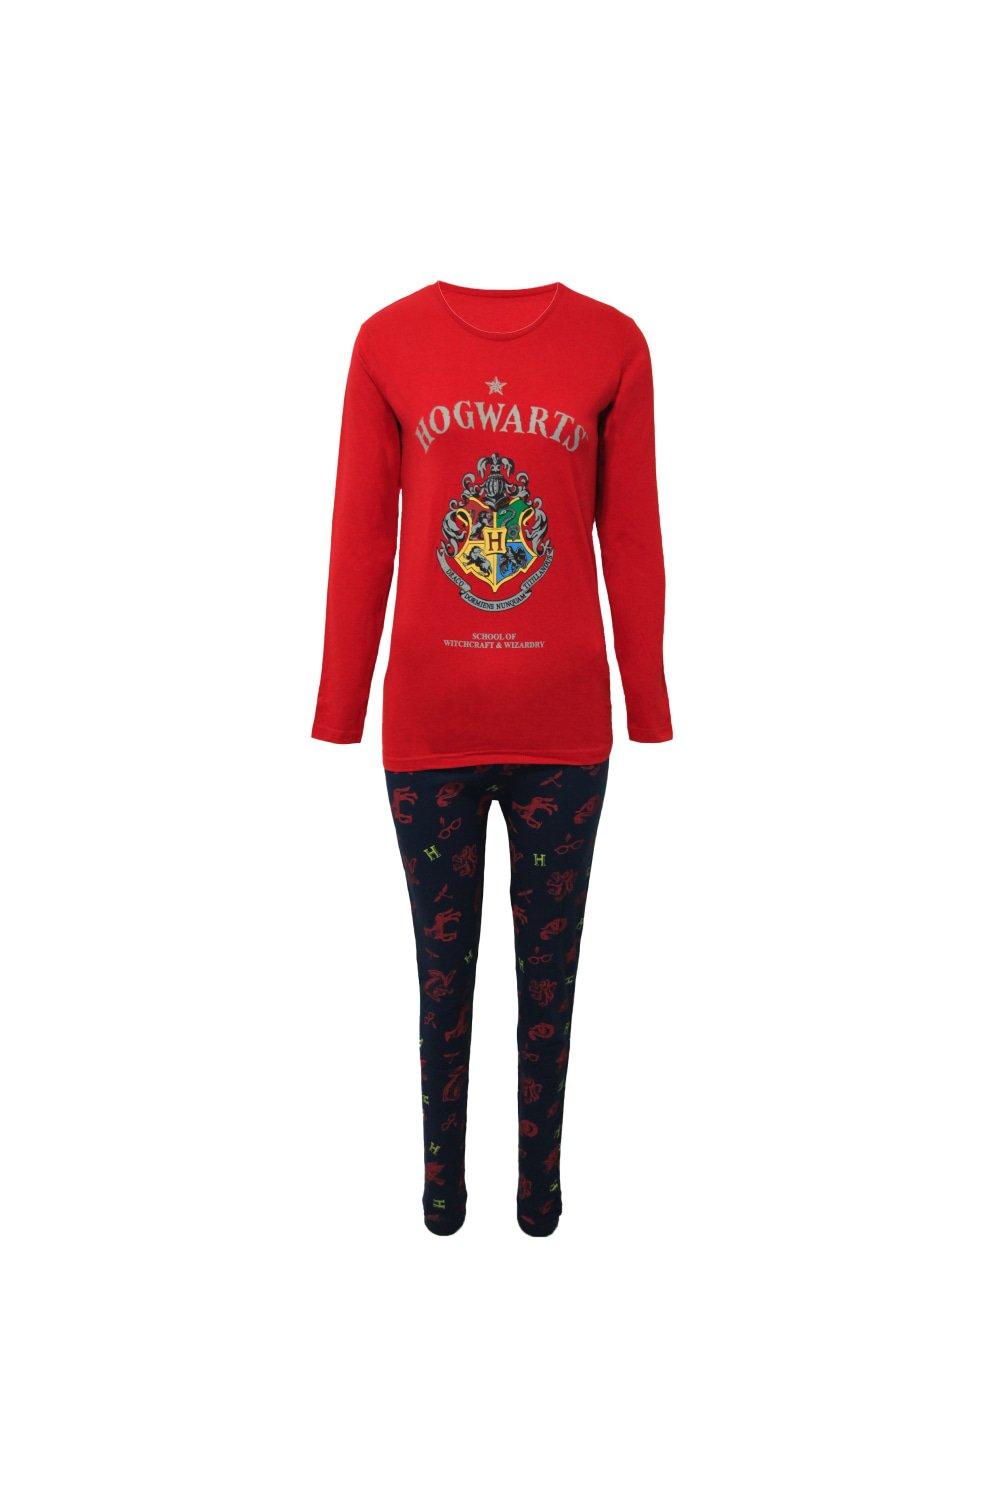 Hogwarts Crest Long Pyjama Set